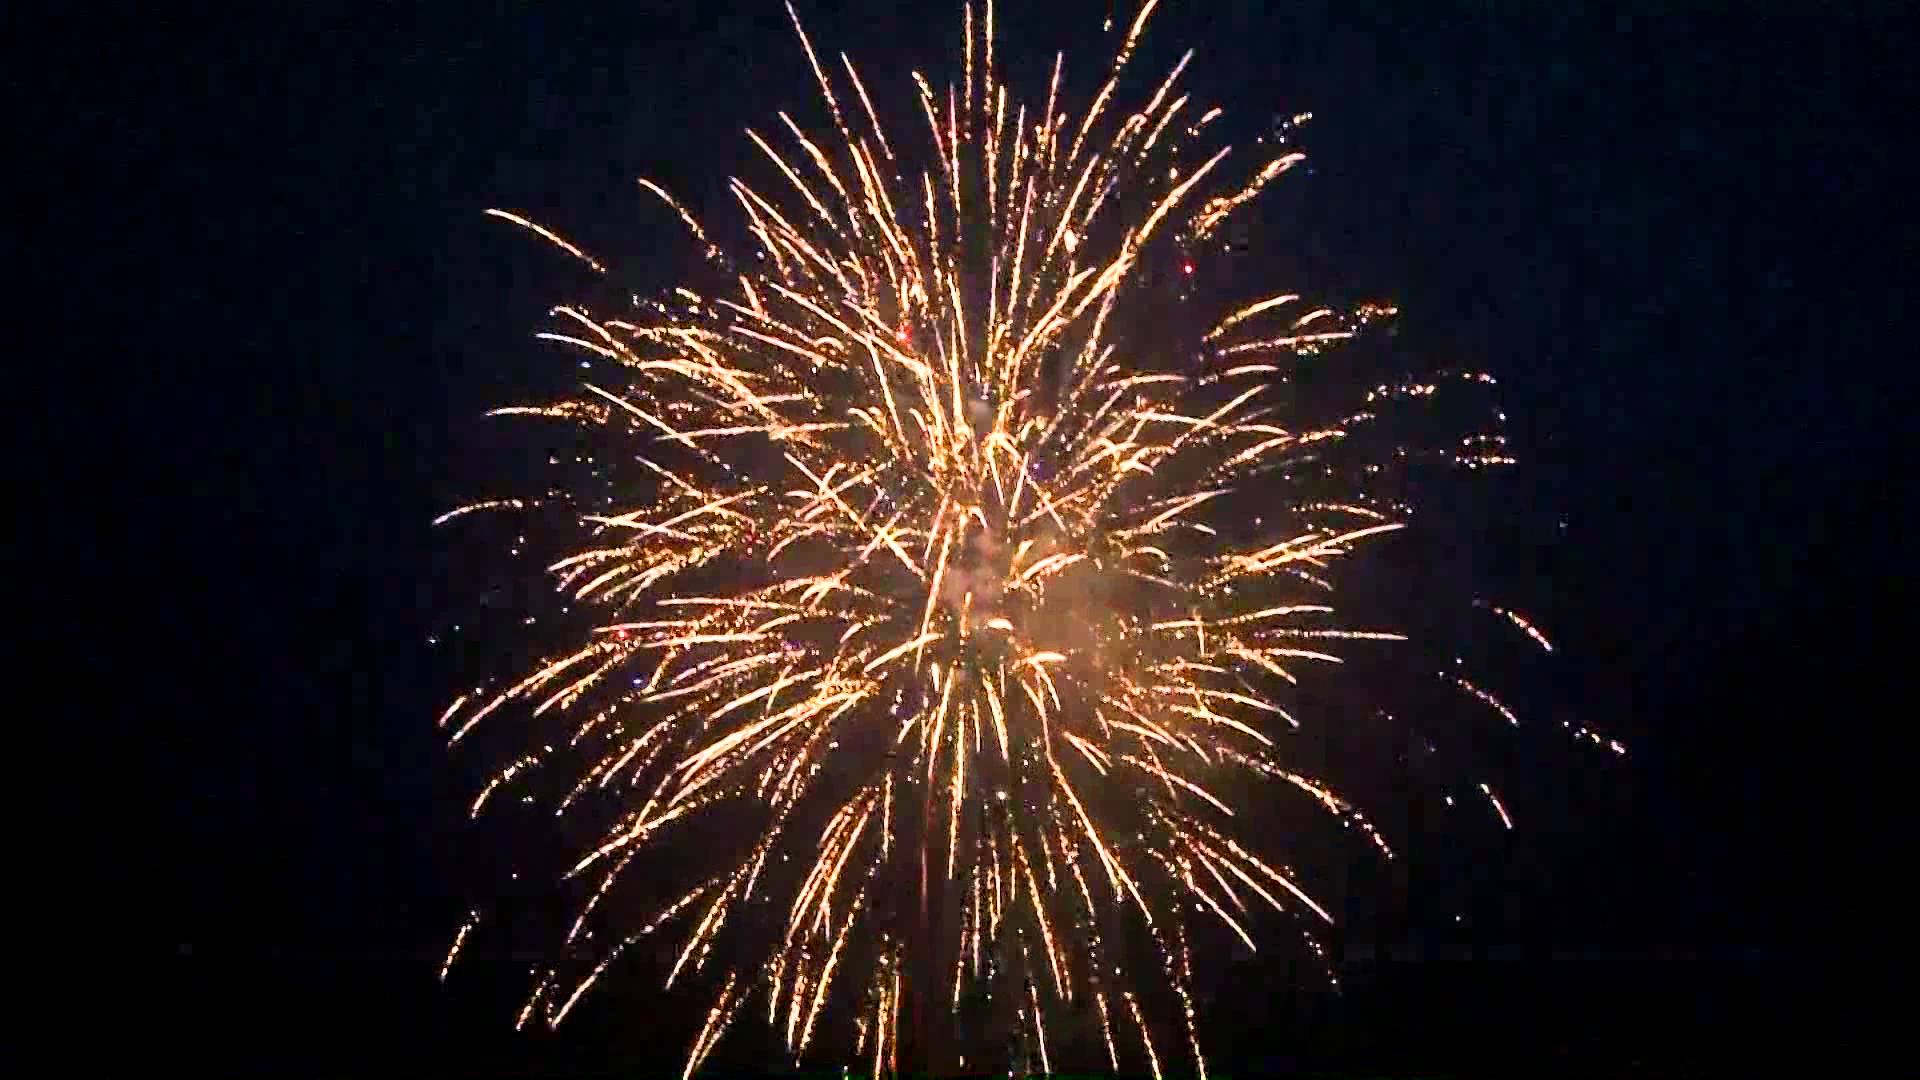 100 shots cake fireworks light the night sky - YouTube